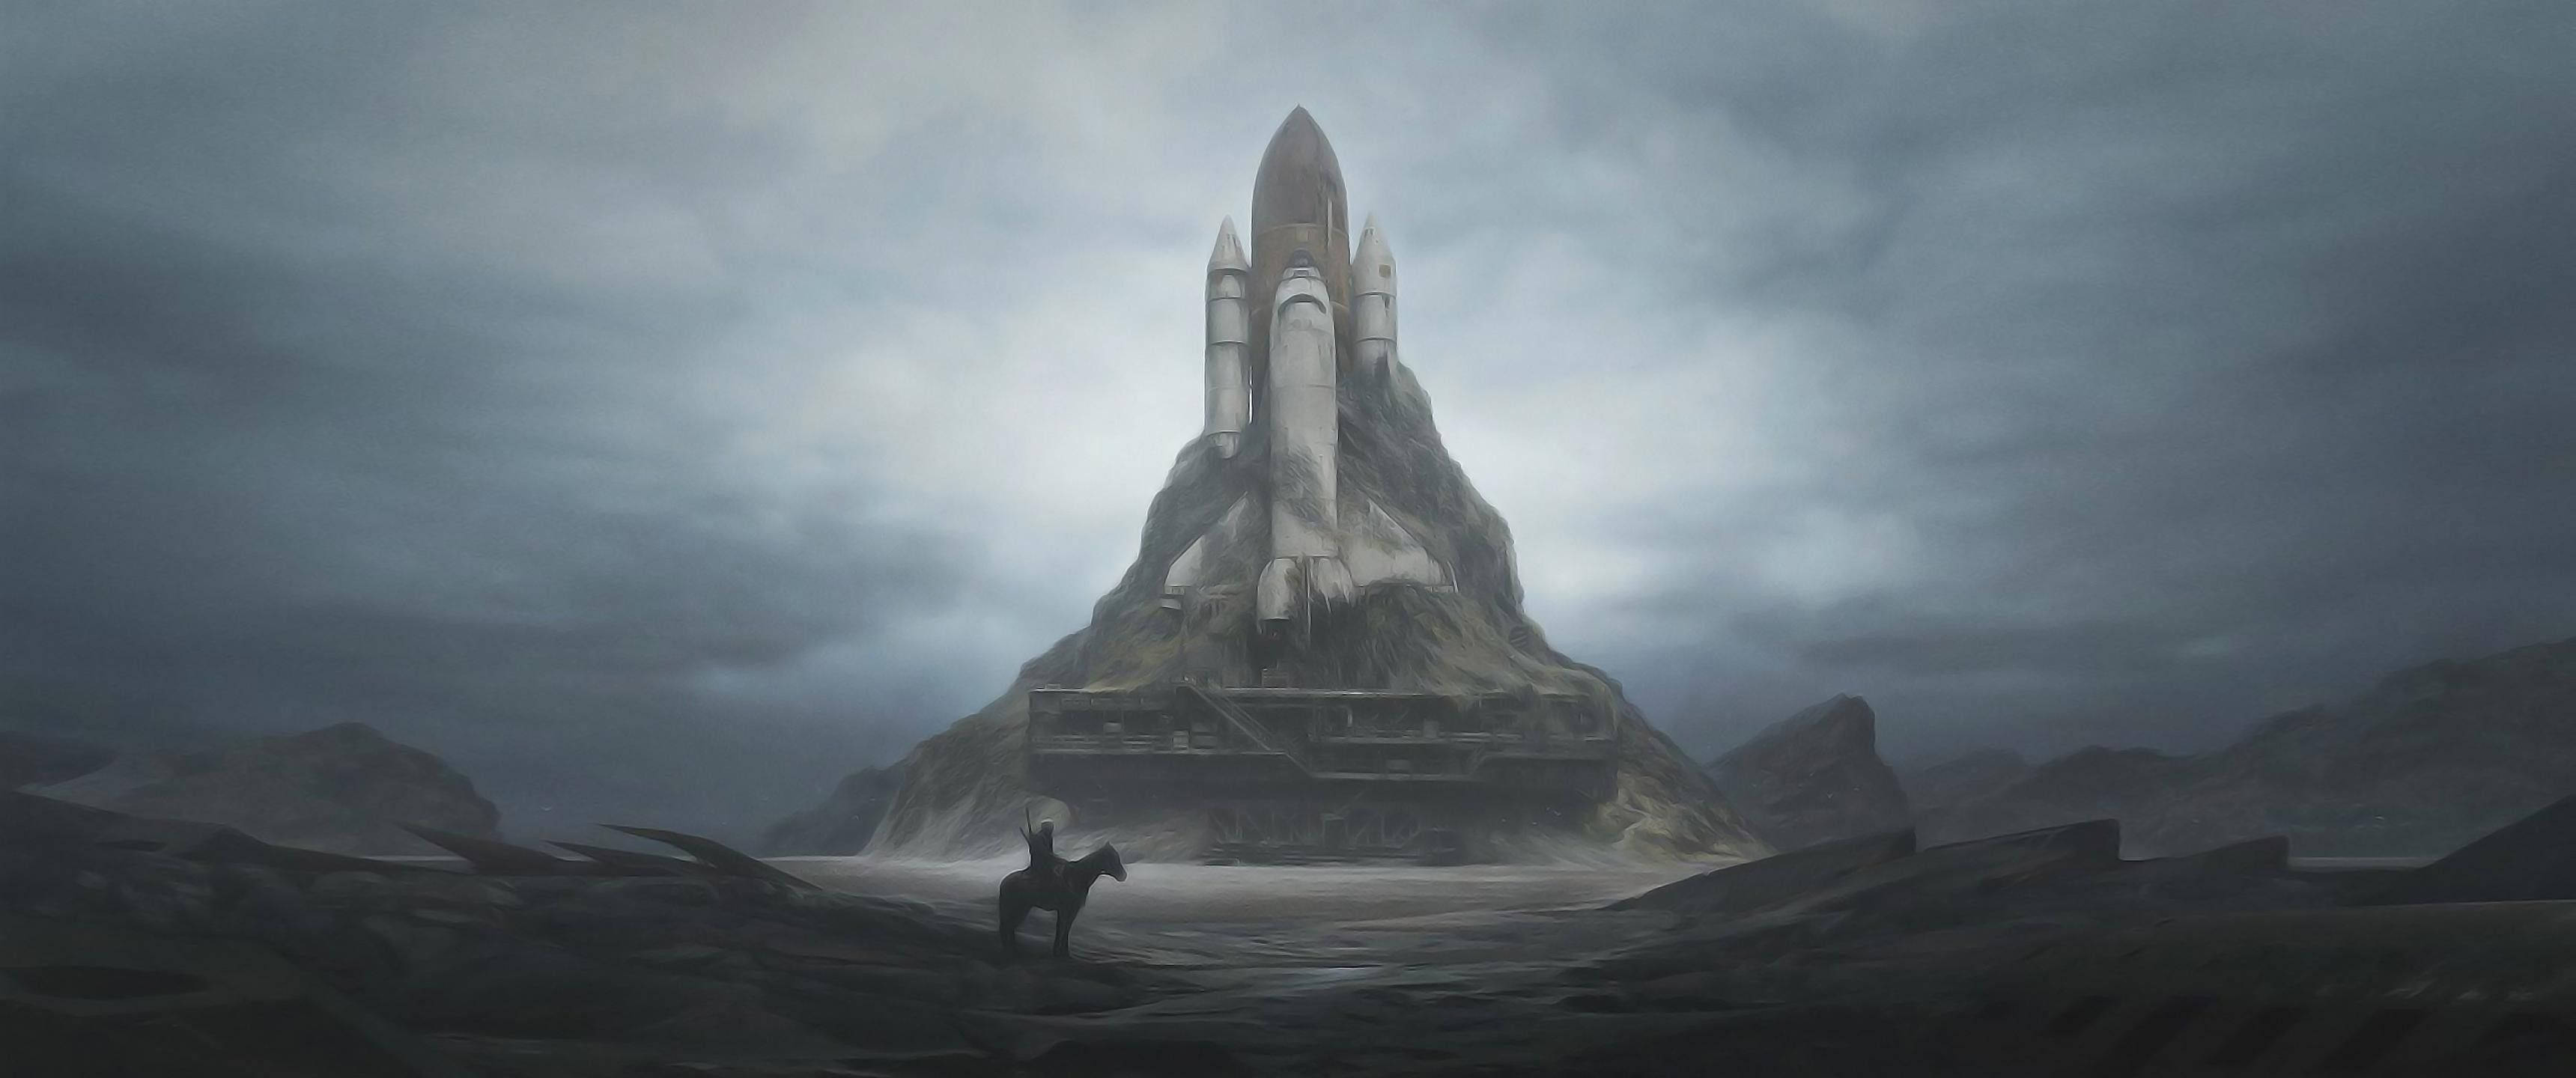 Space Rocket Digital Art Background